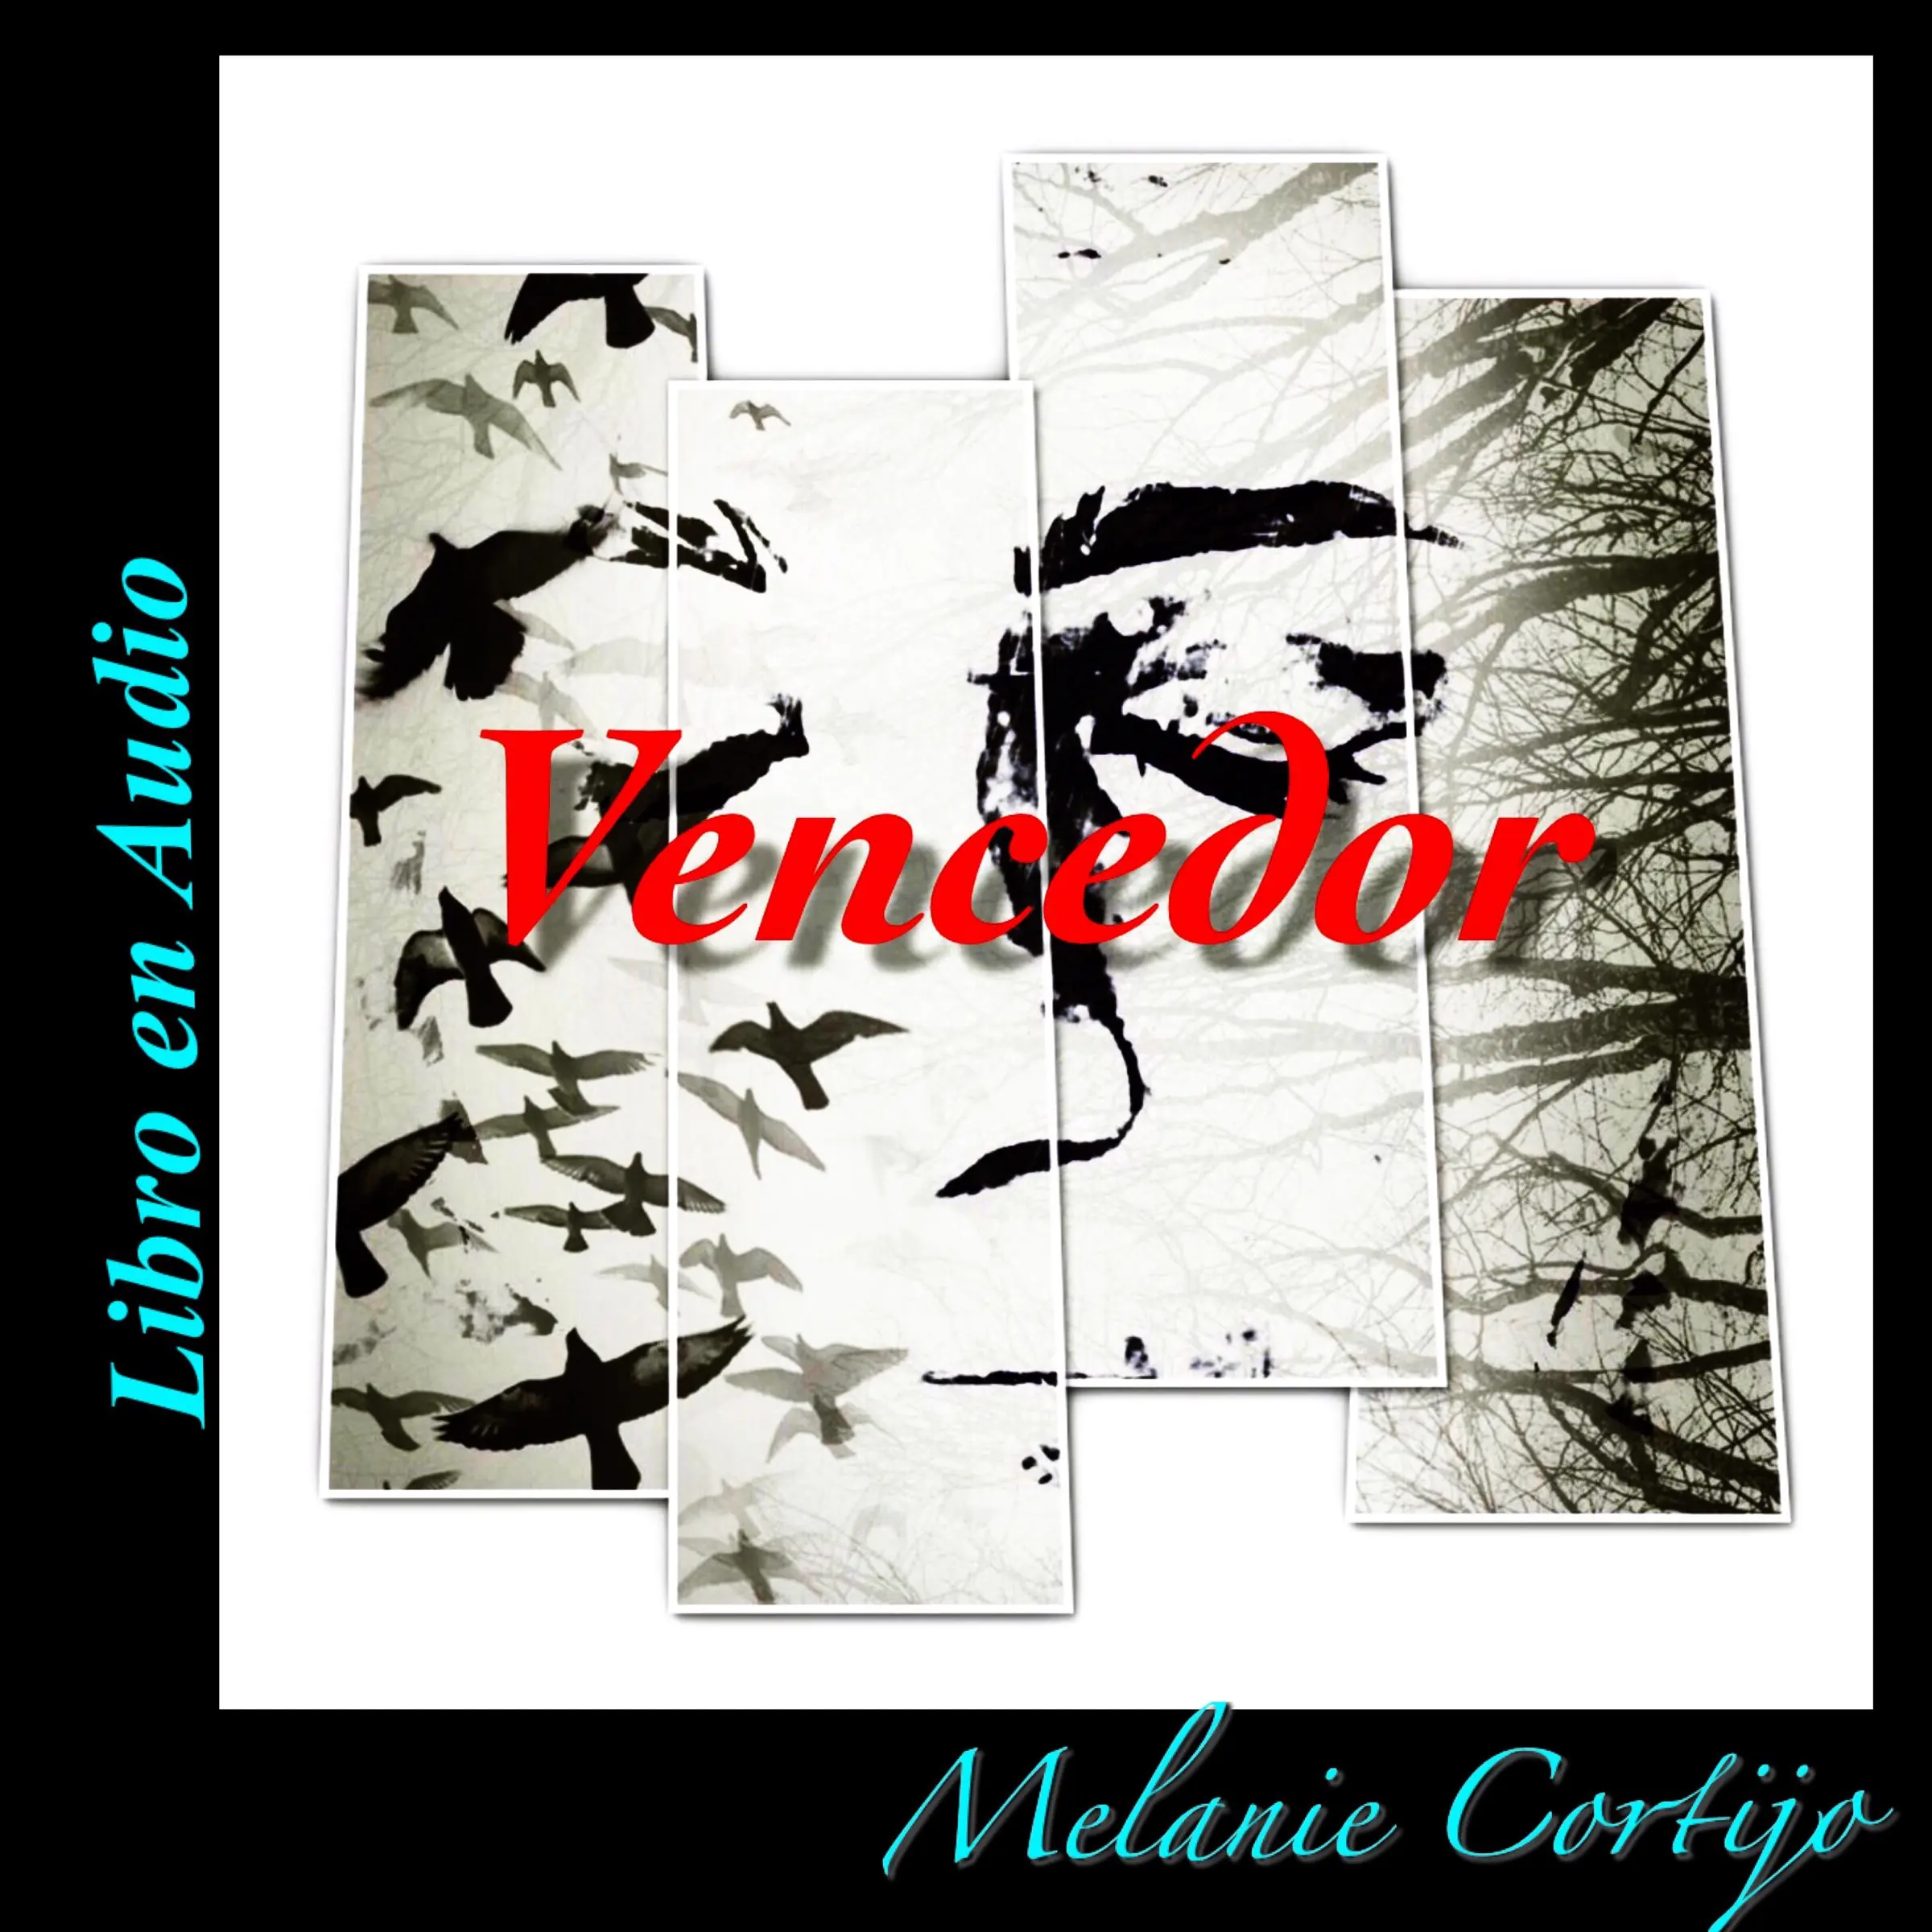 Vencedor Audiobook by Melanie Cortijo